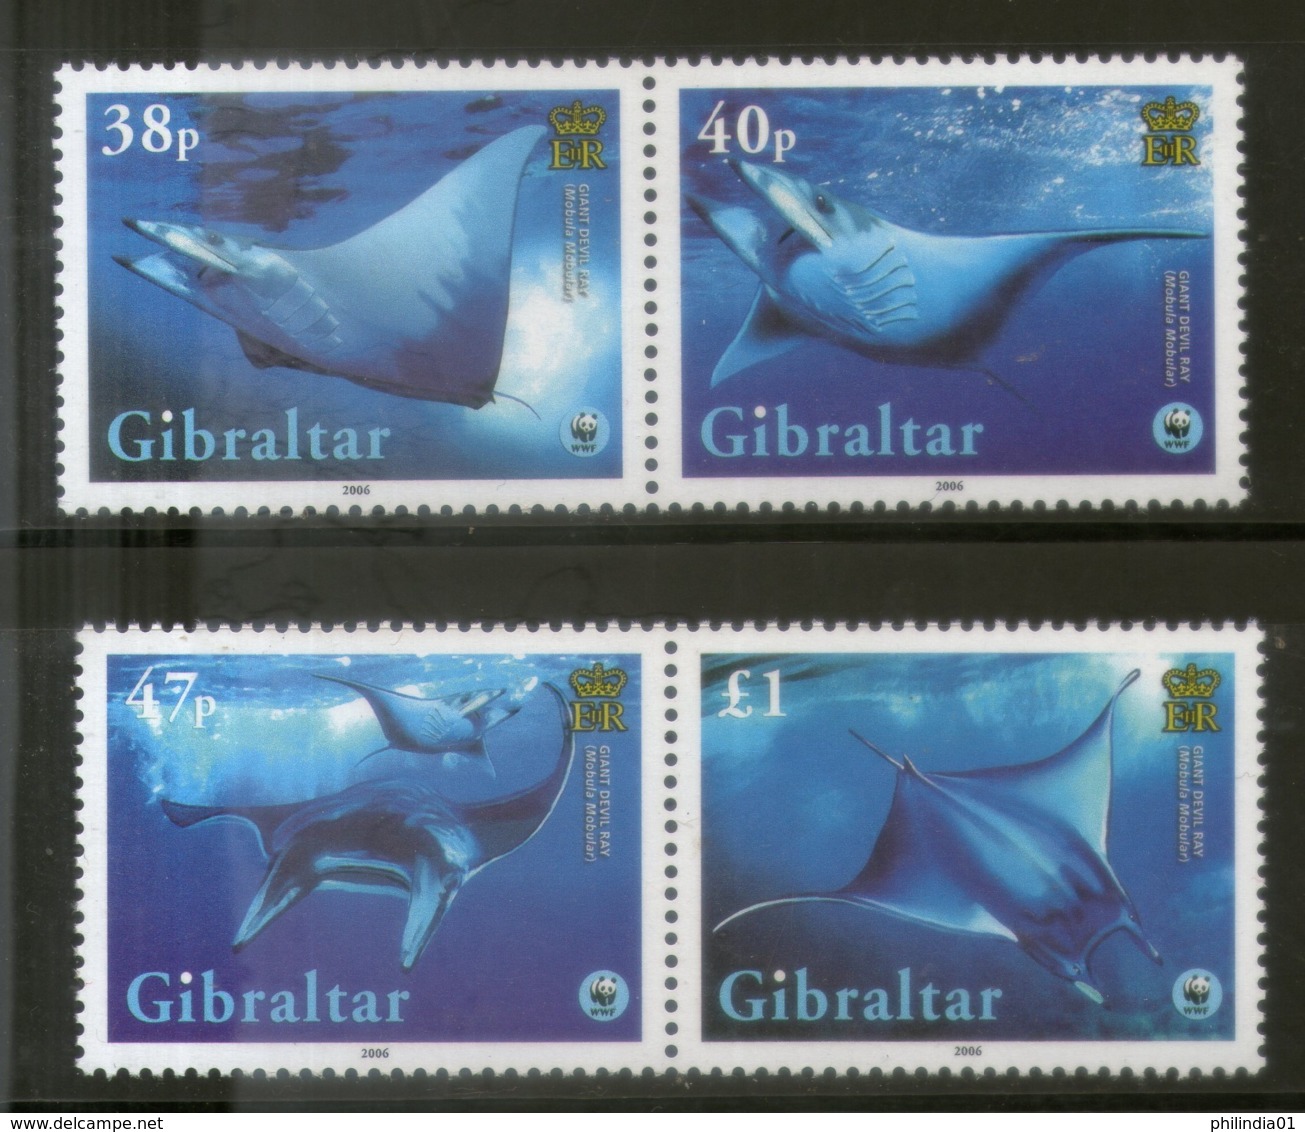 Gibraltar 2006 WWF Giant Devil Ray Fish Marine Life Animal Sc 1037 MNH # 380 - Unused Stamps